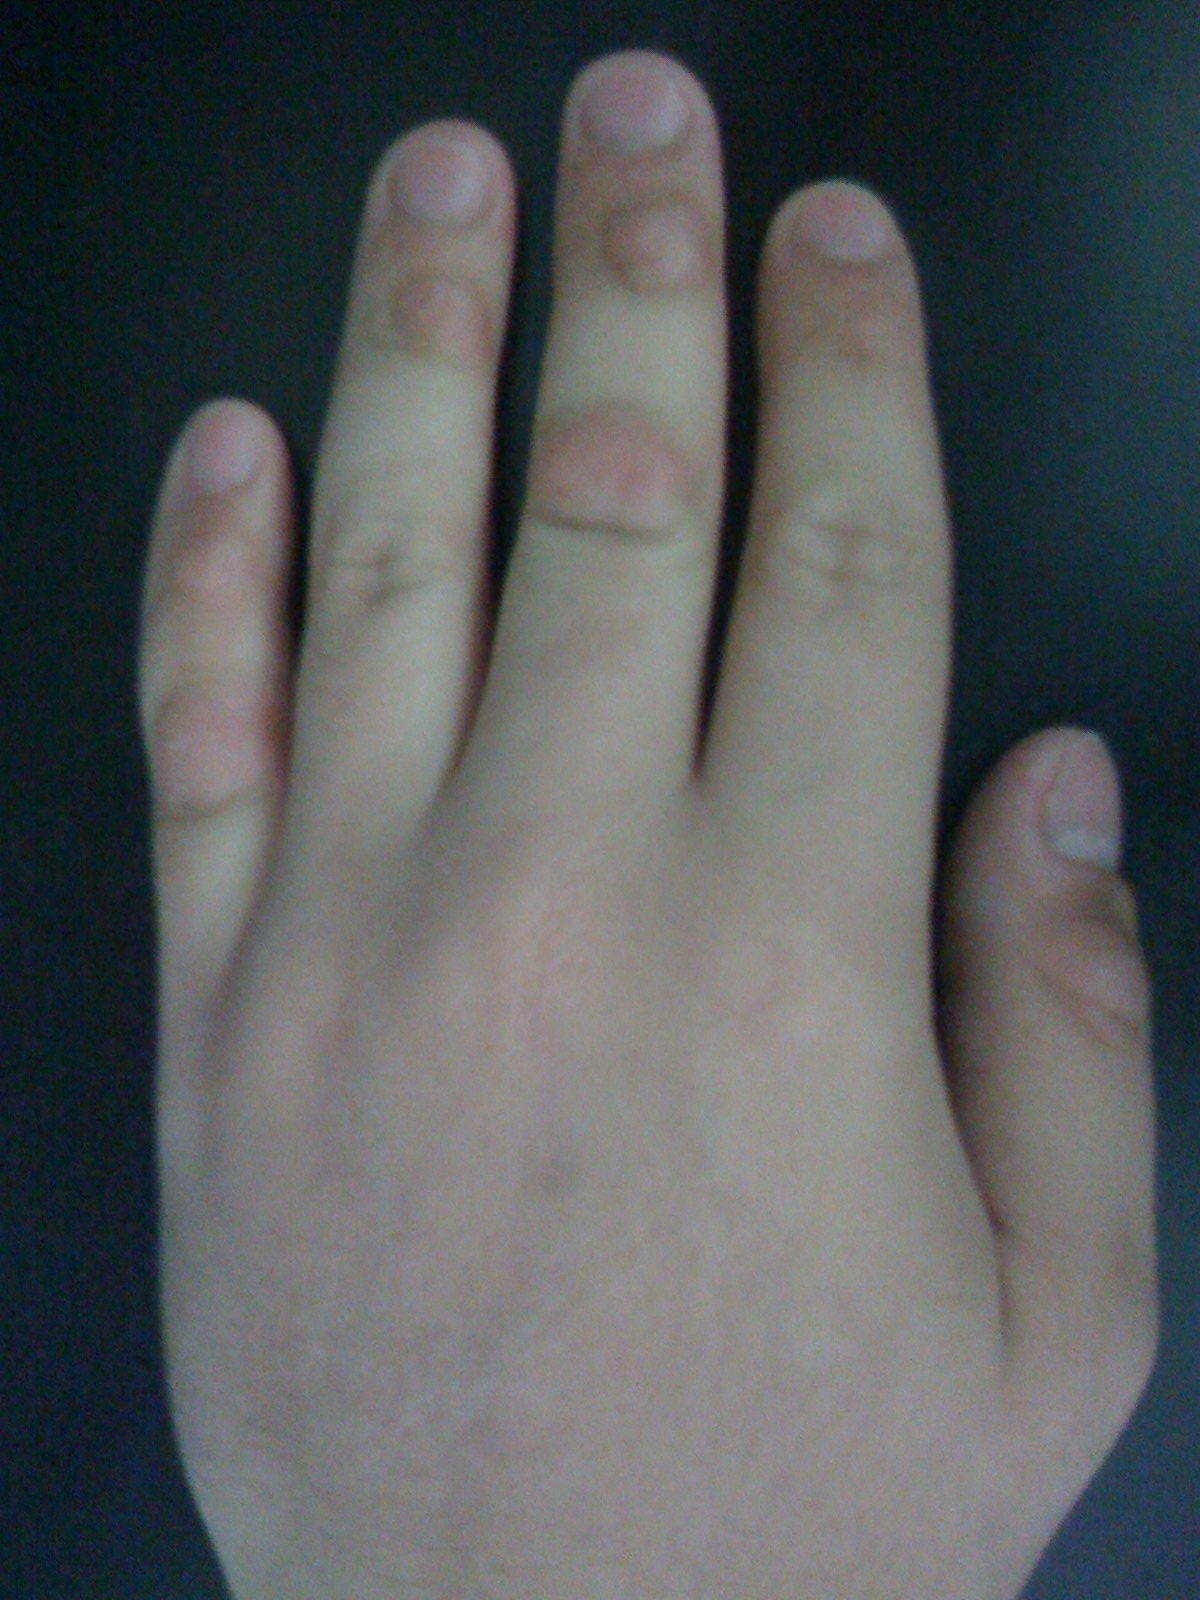 File:Dermatillomania fingers.JPG